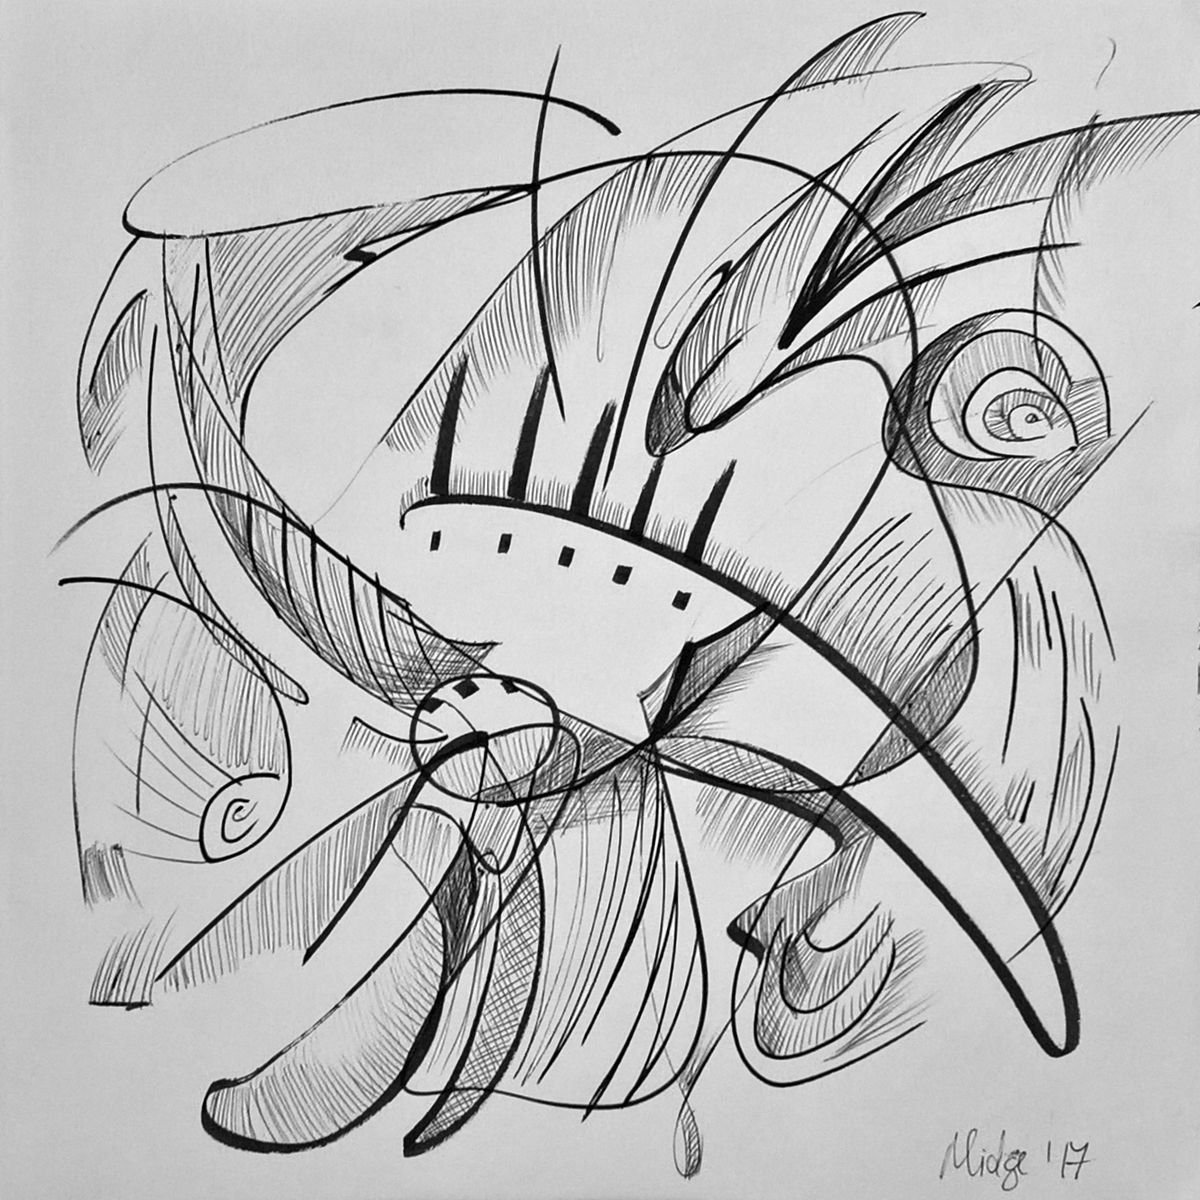 Brushstrokes (Ink drawing) by Midge